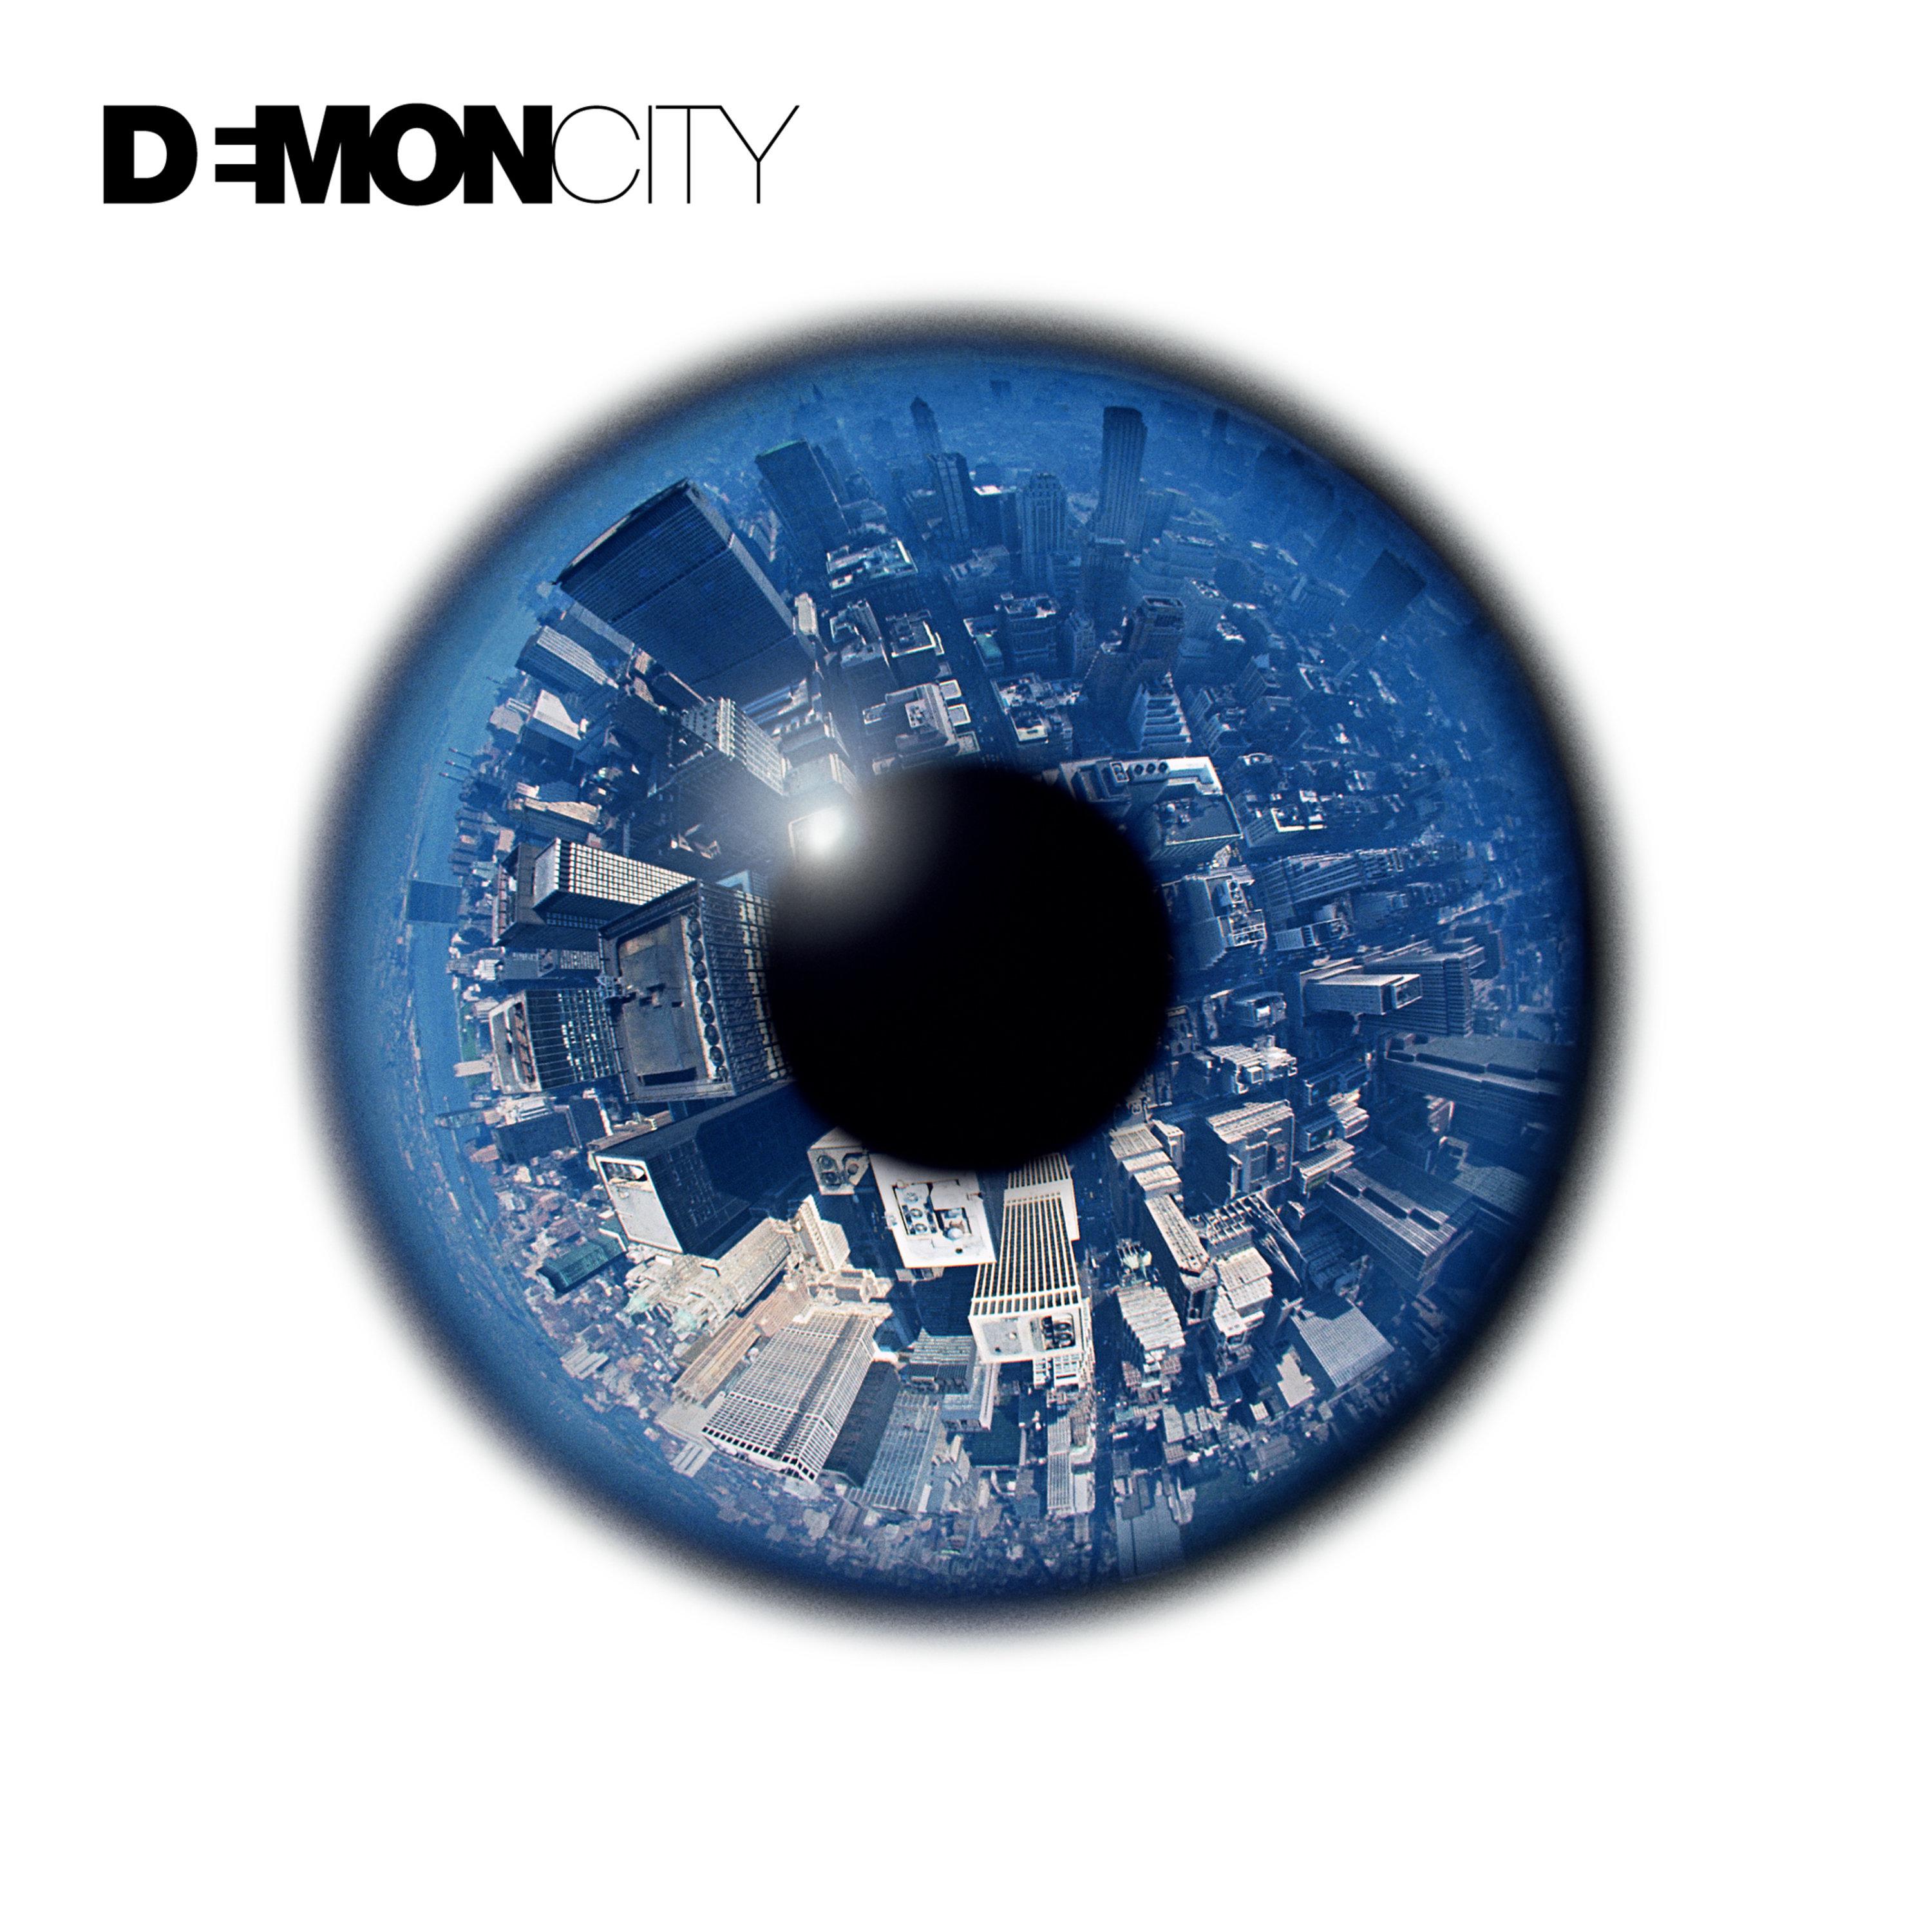 Demon - Luanda City Beats (P.A.T 404 Remix)